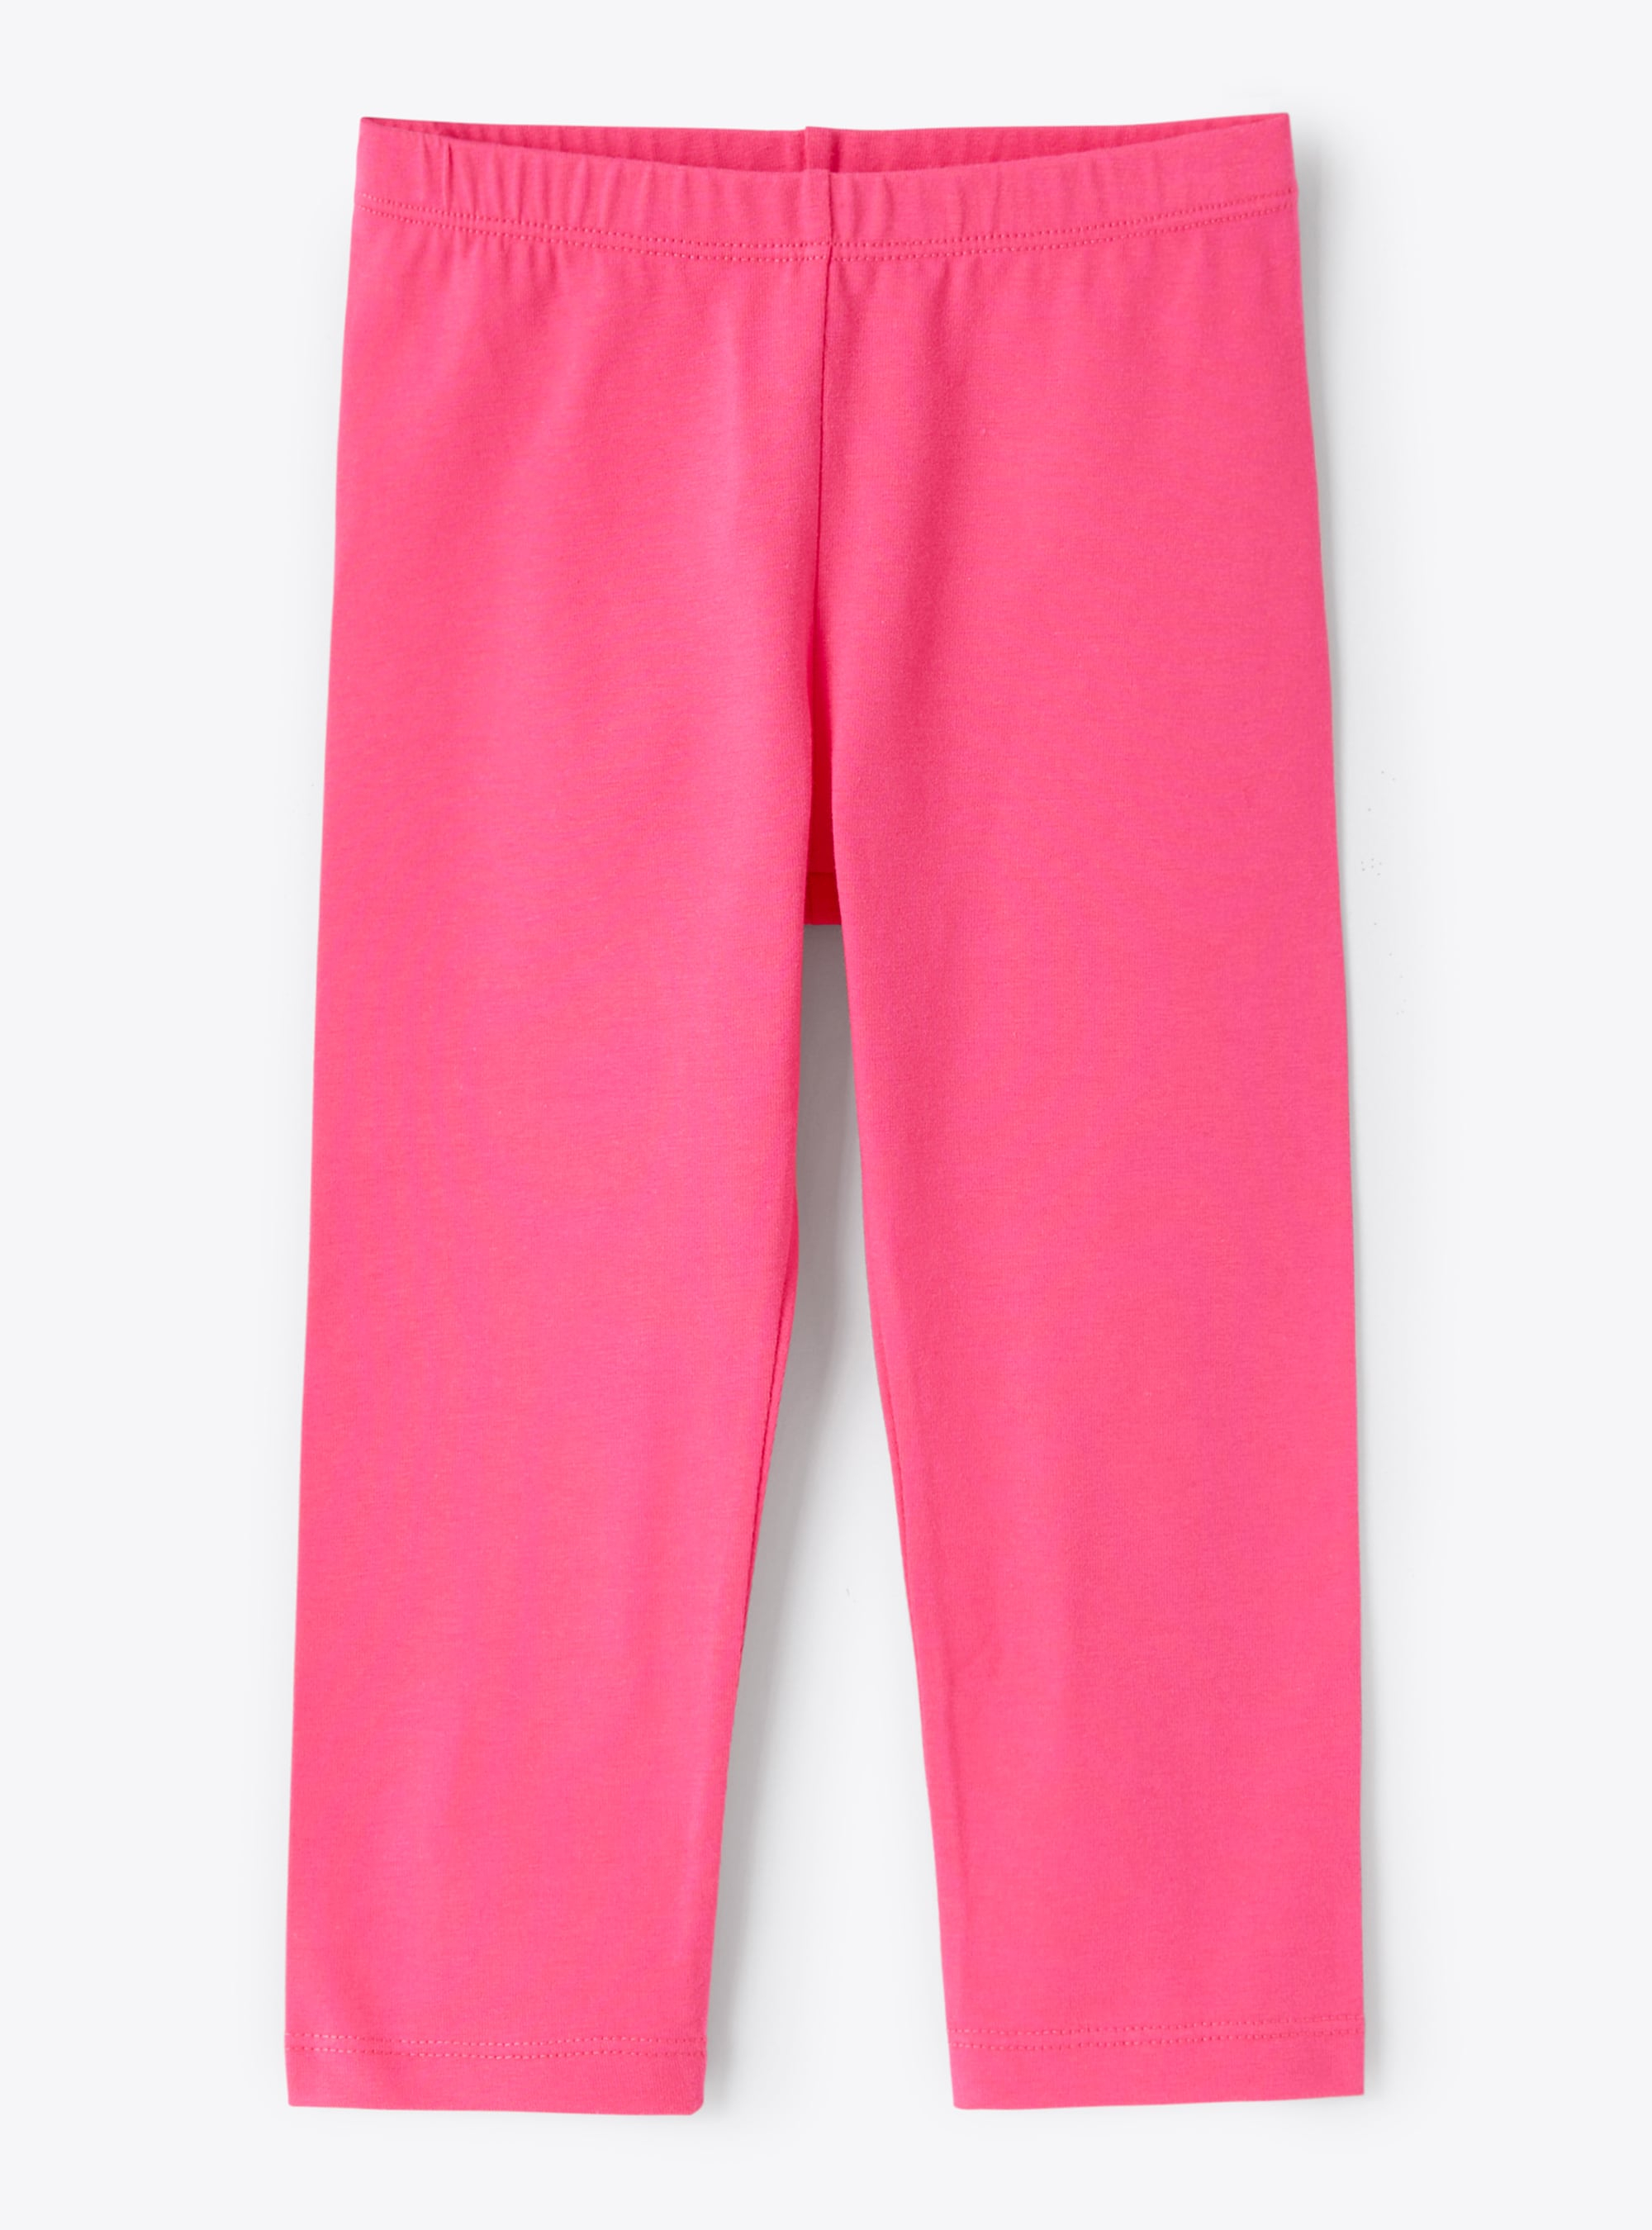 Leggings in pink jersey - Trousers - Il Gufo